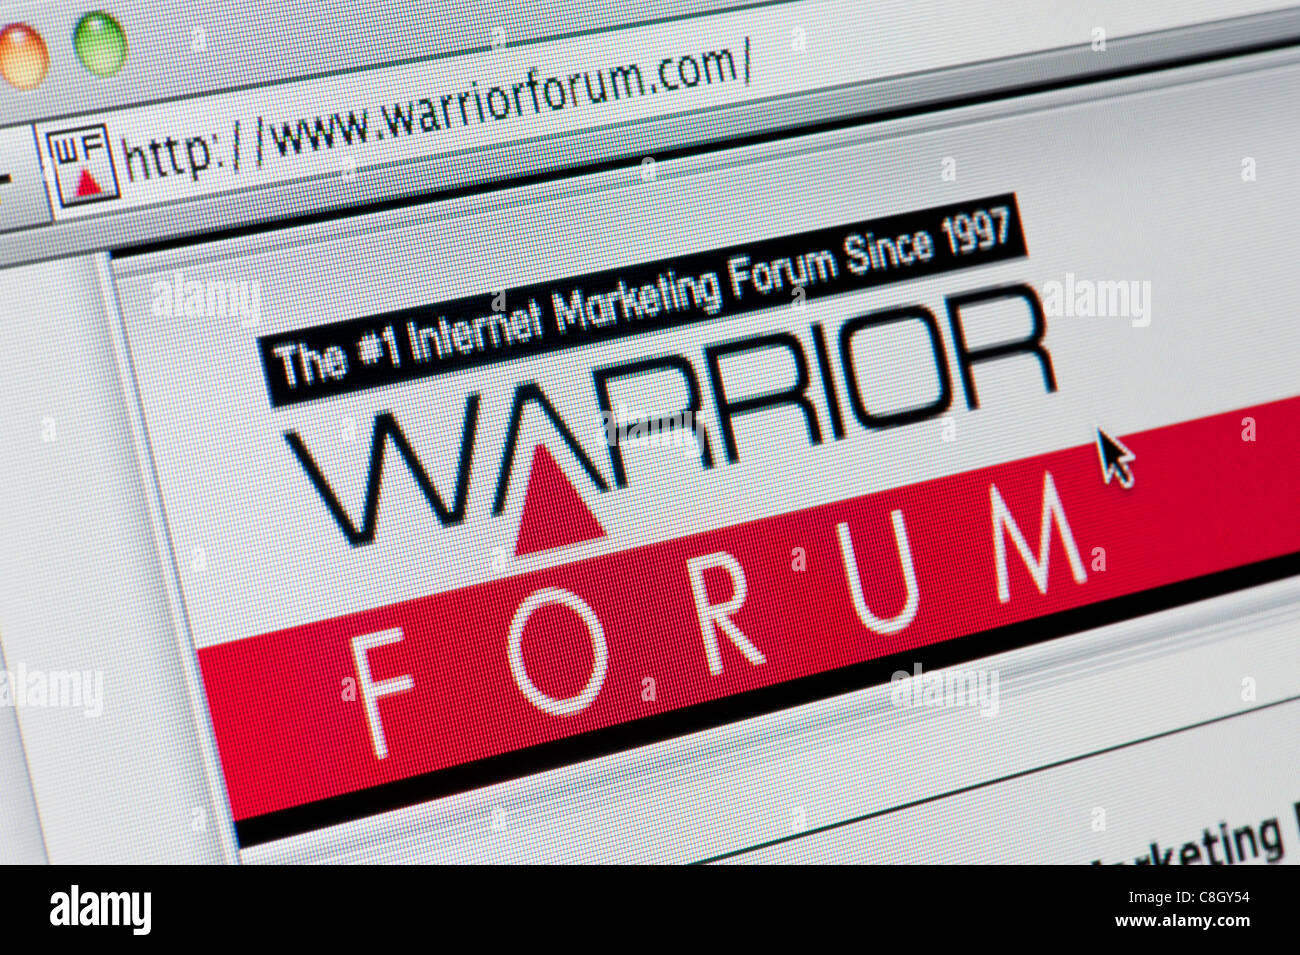 Art of Your Mind - Warrior Forum